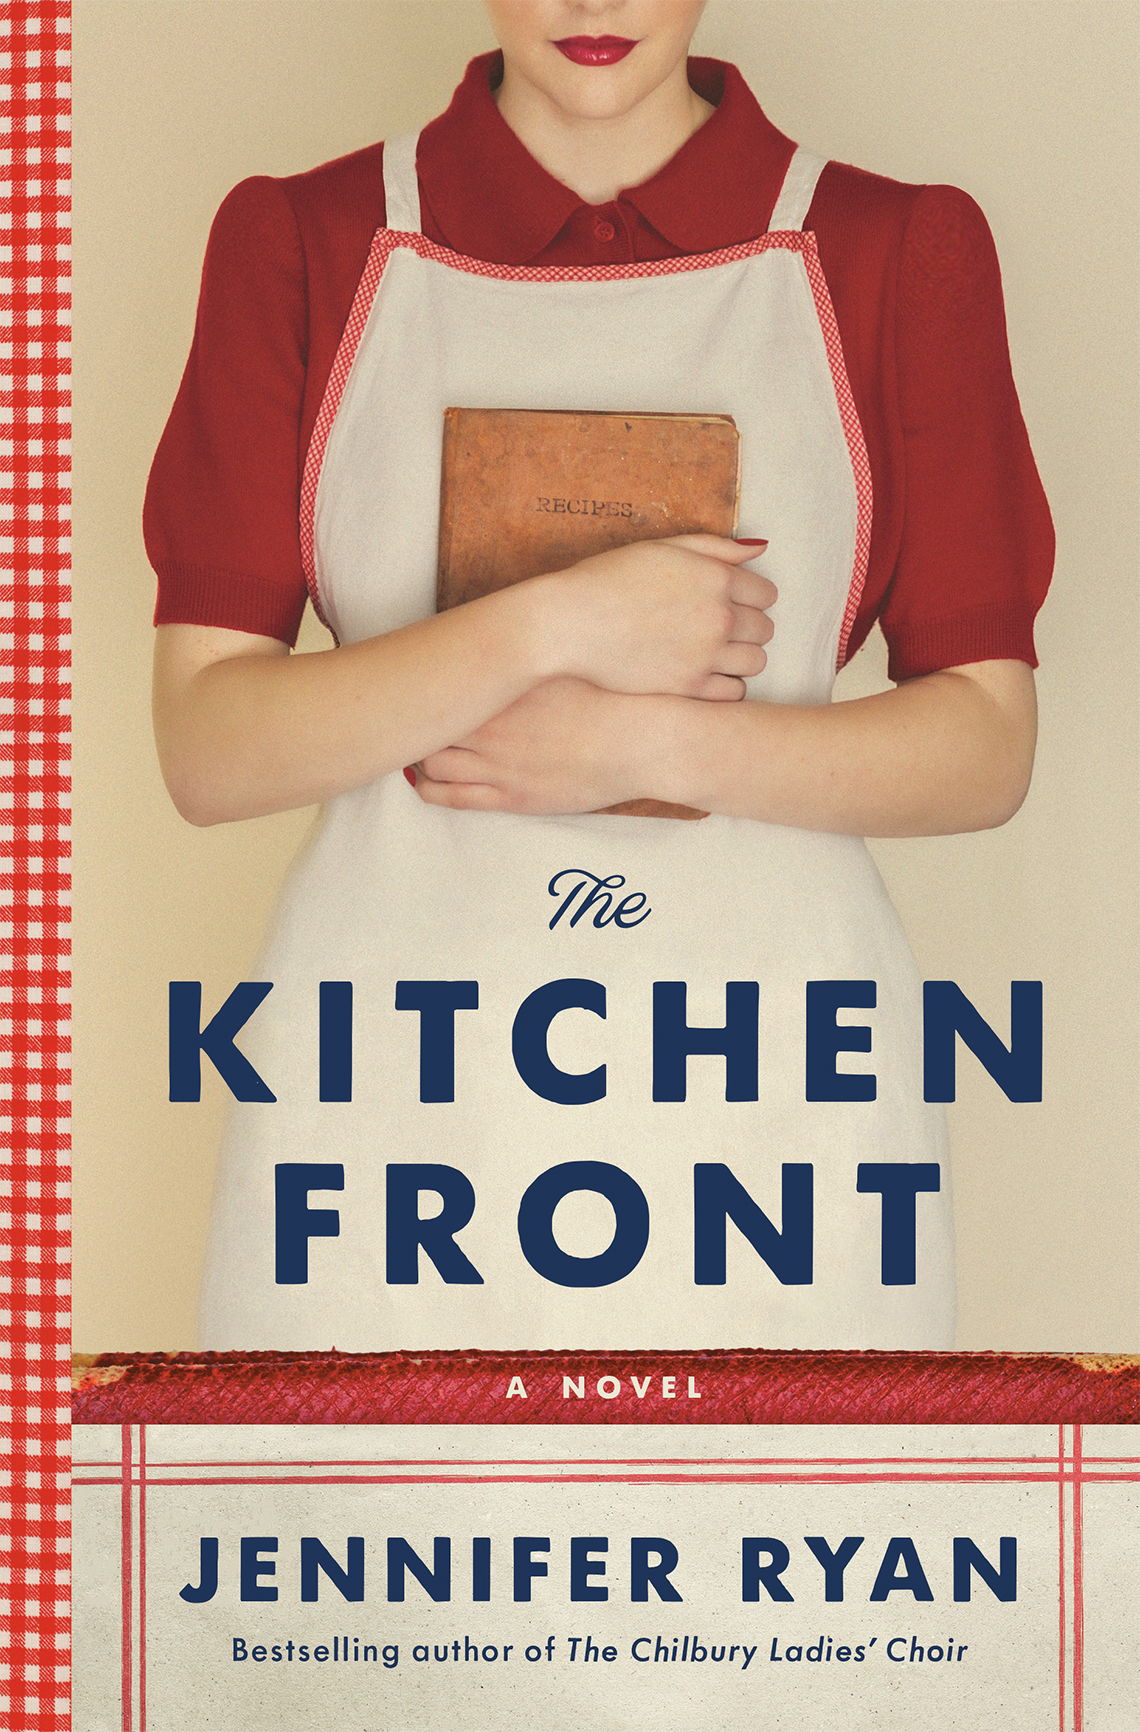 Portada del libro The Kitchen Front de Jennifer Ryan.